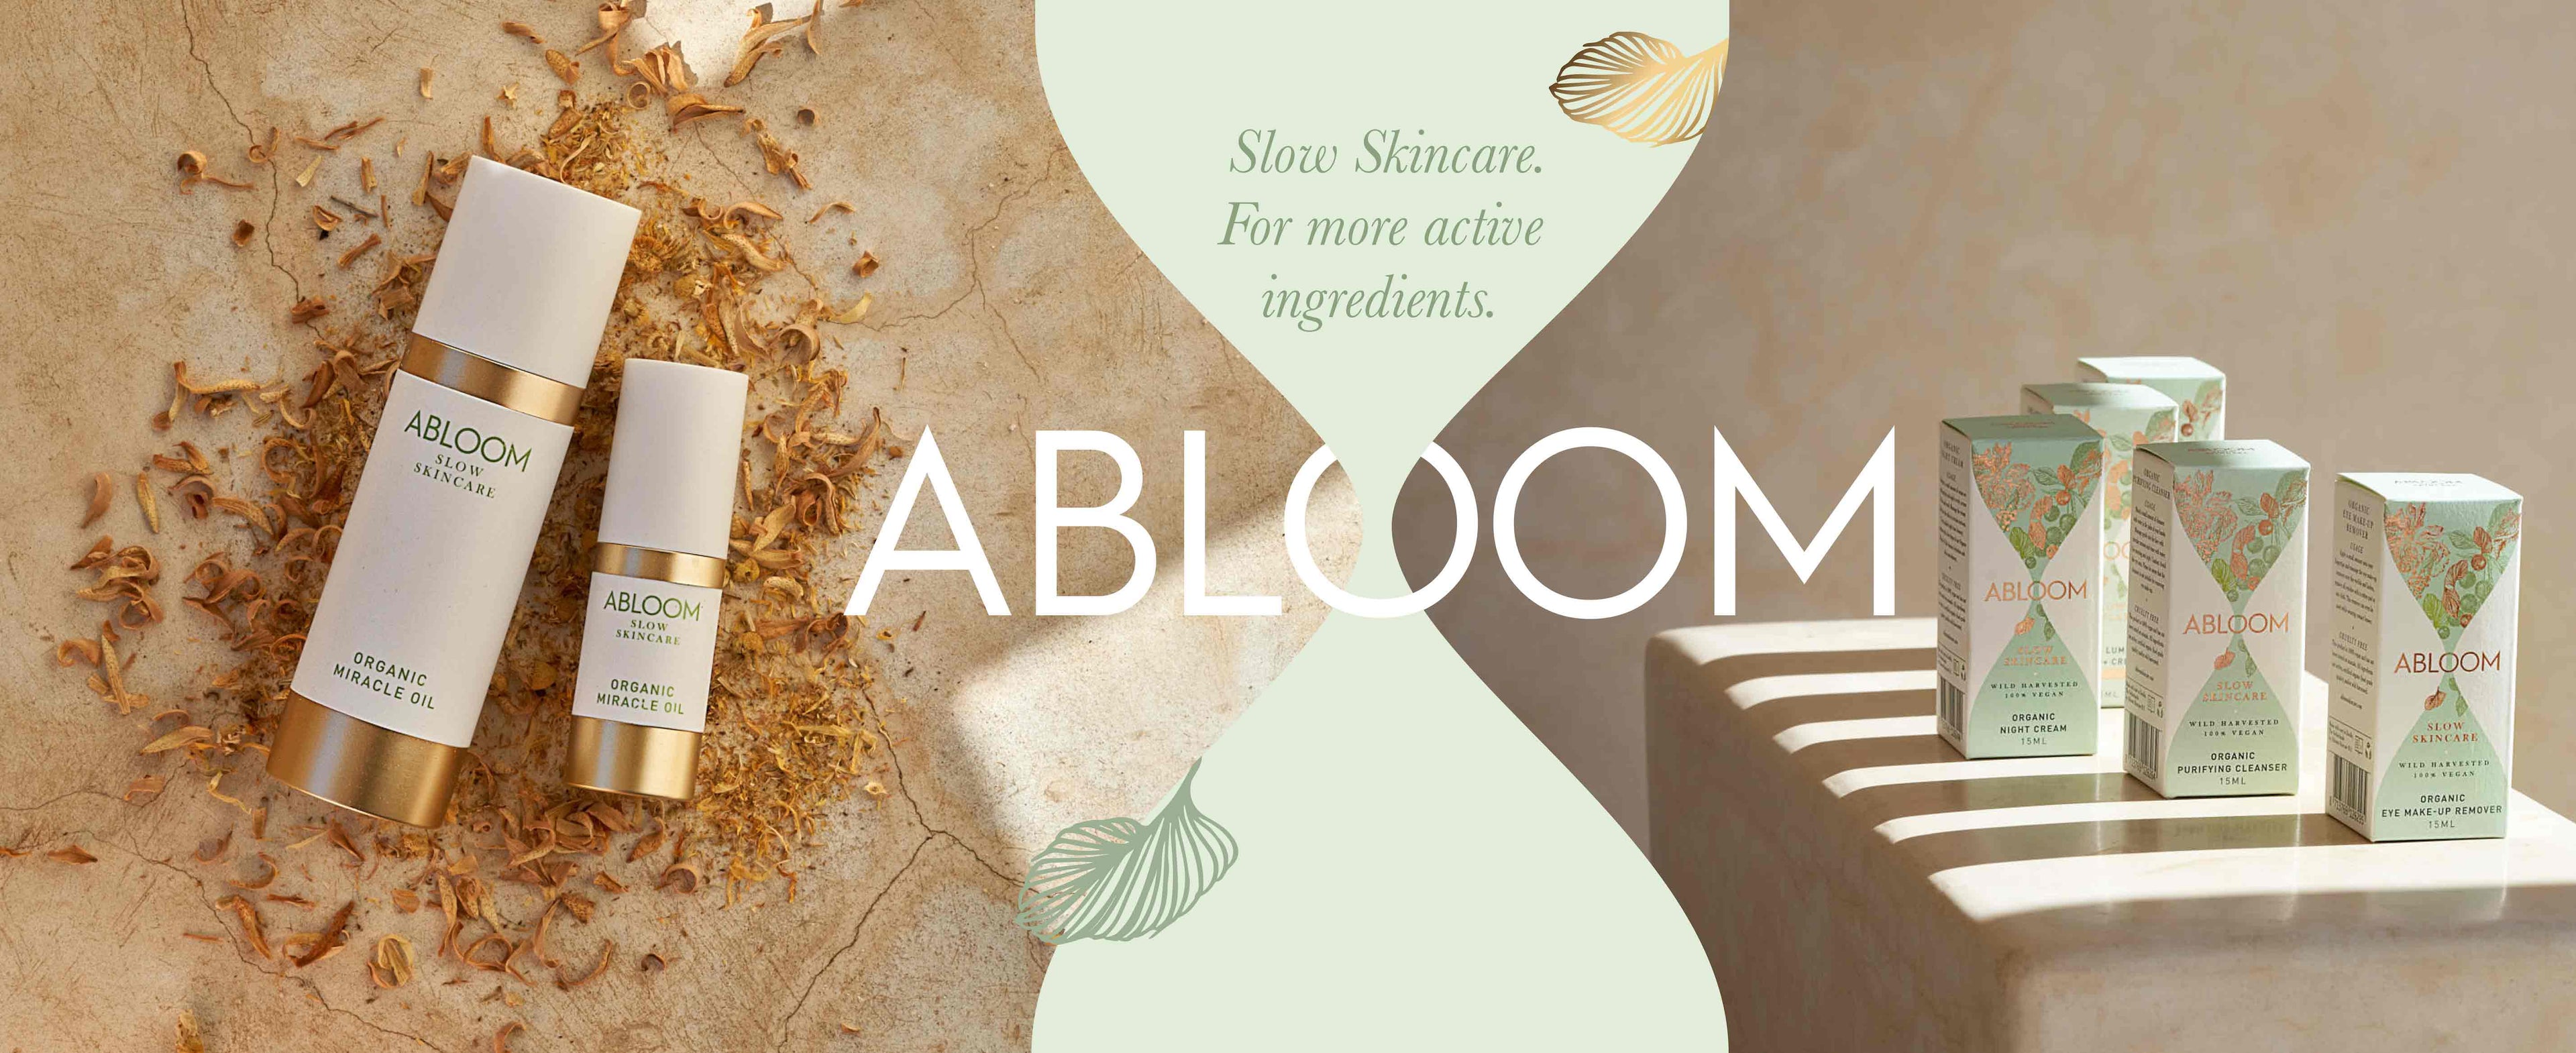 Abloom Slow Skincare Rosacea Skin